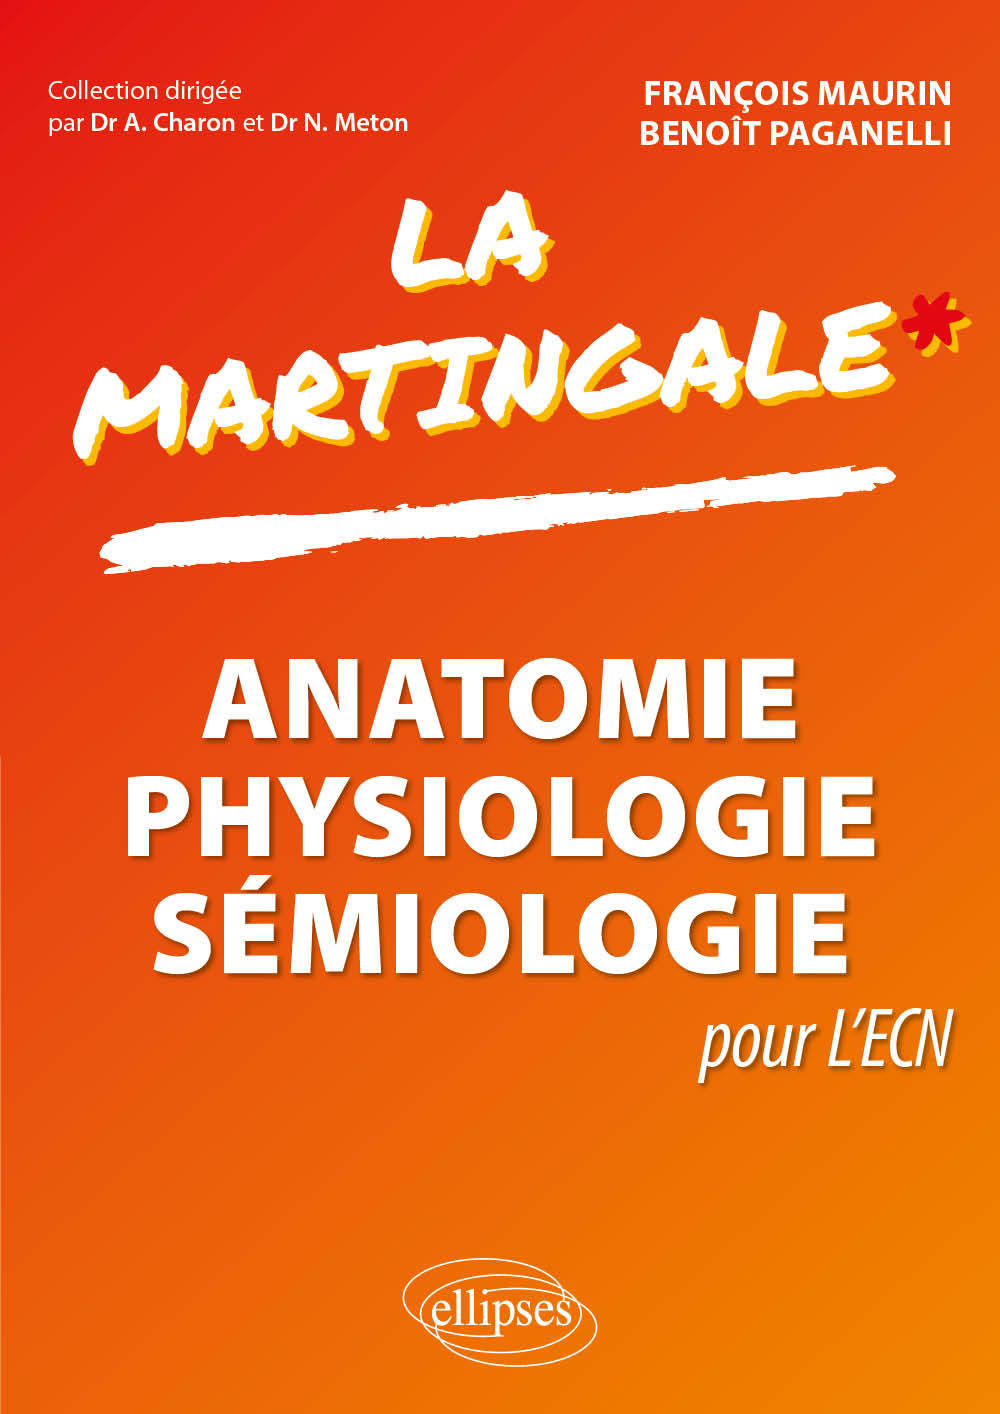 Carte Anatomie – Physiologie – Sémiologie pour l’EDN Maurin